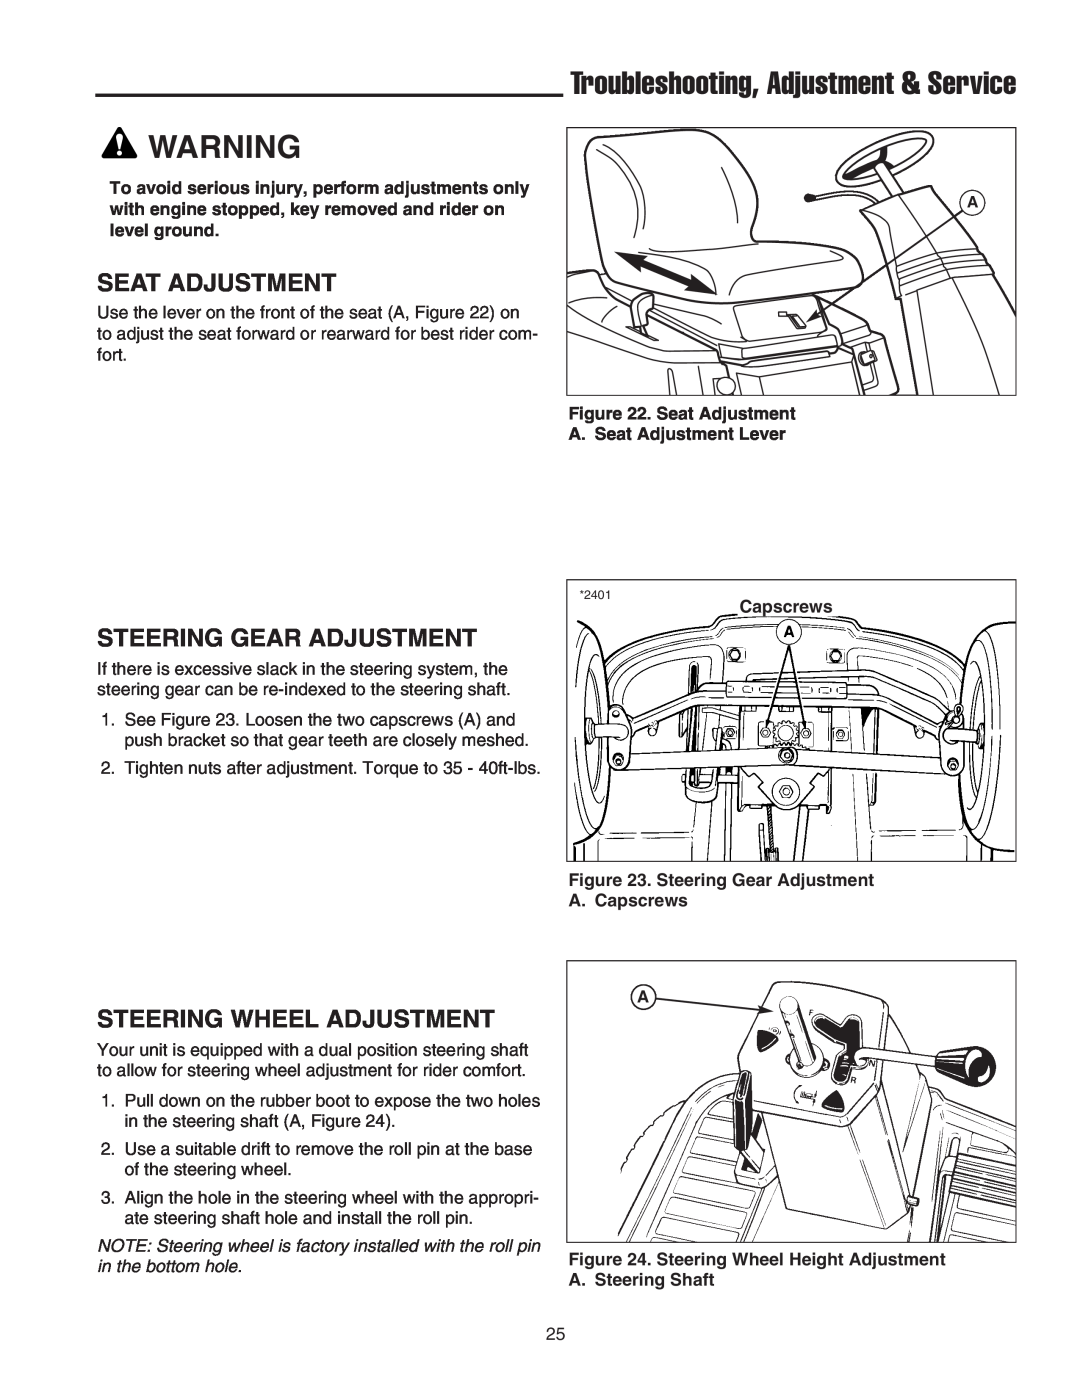 Snapper 400 Series manual Seat Adjustment, Steering Gear Adjustment, Steering Wheel Adjustment 